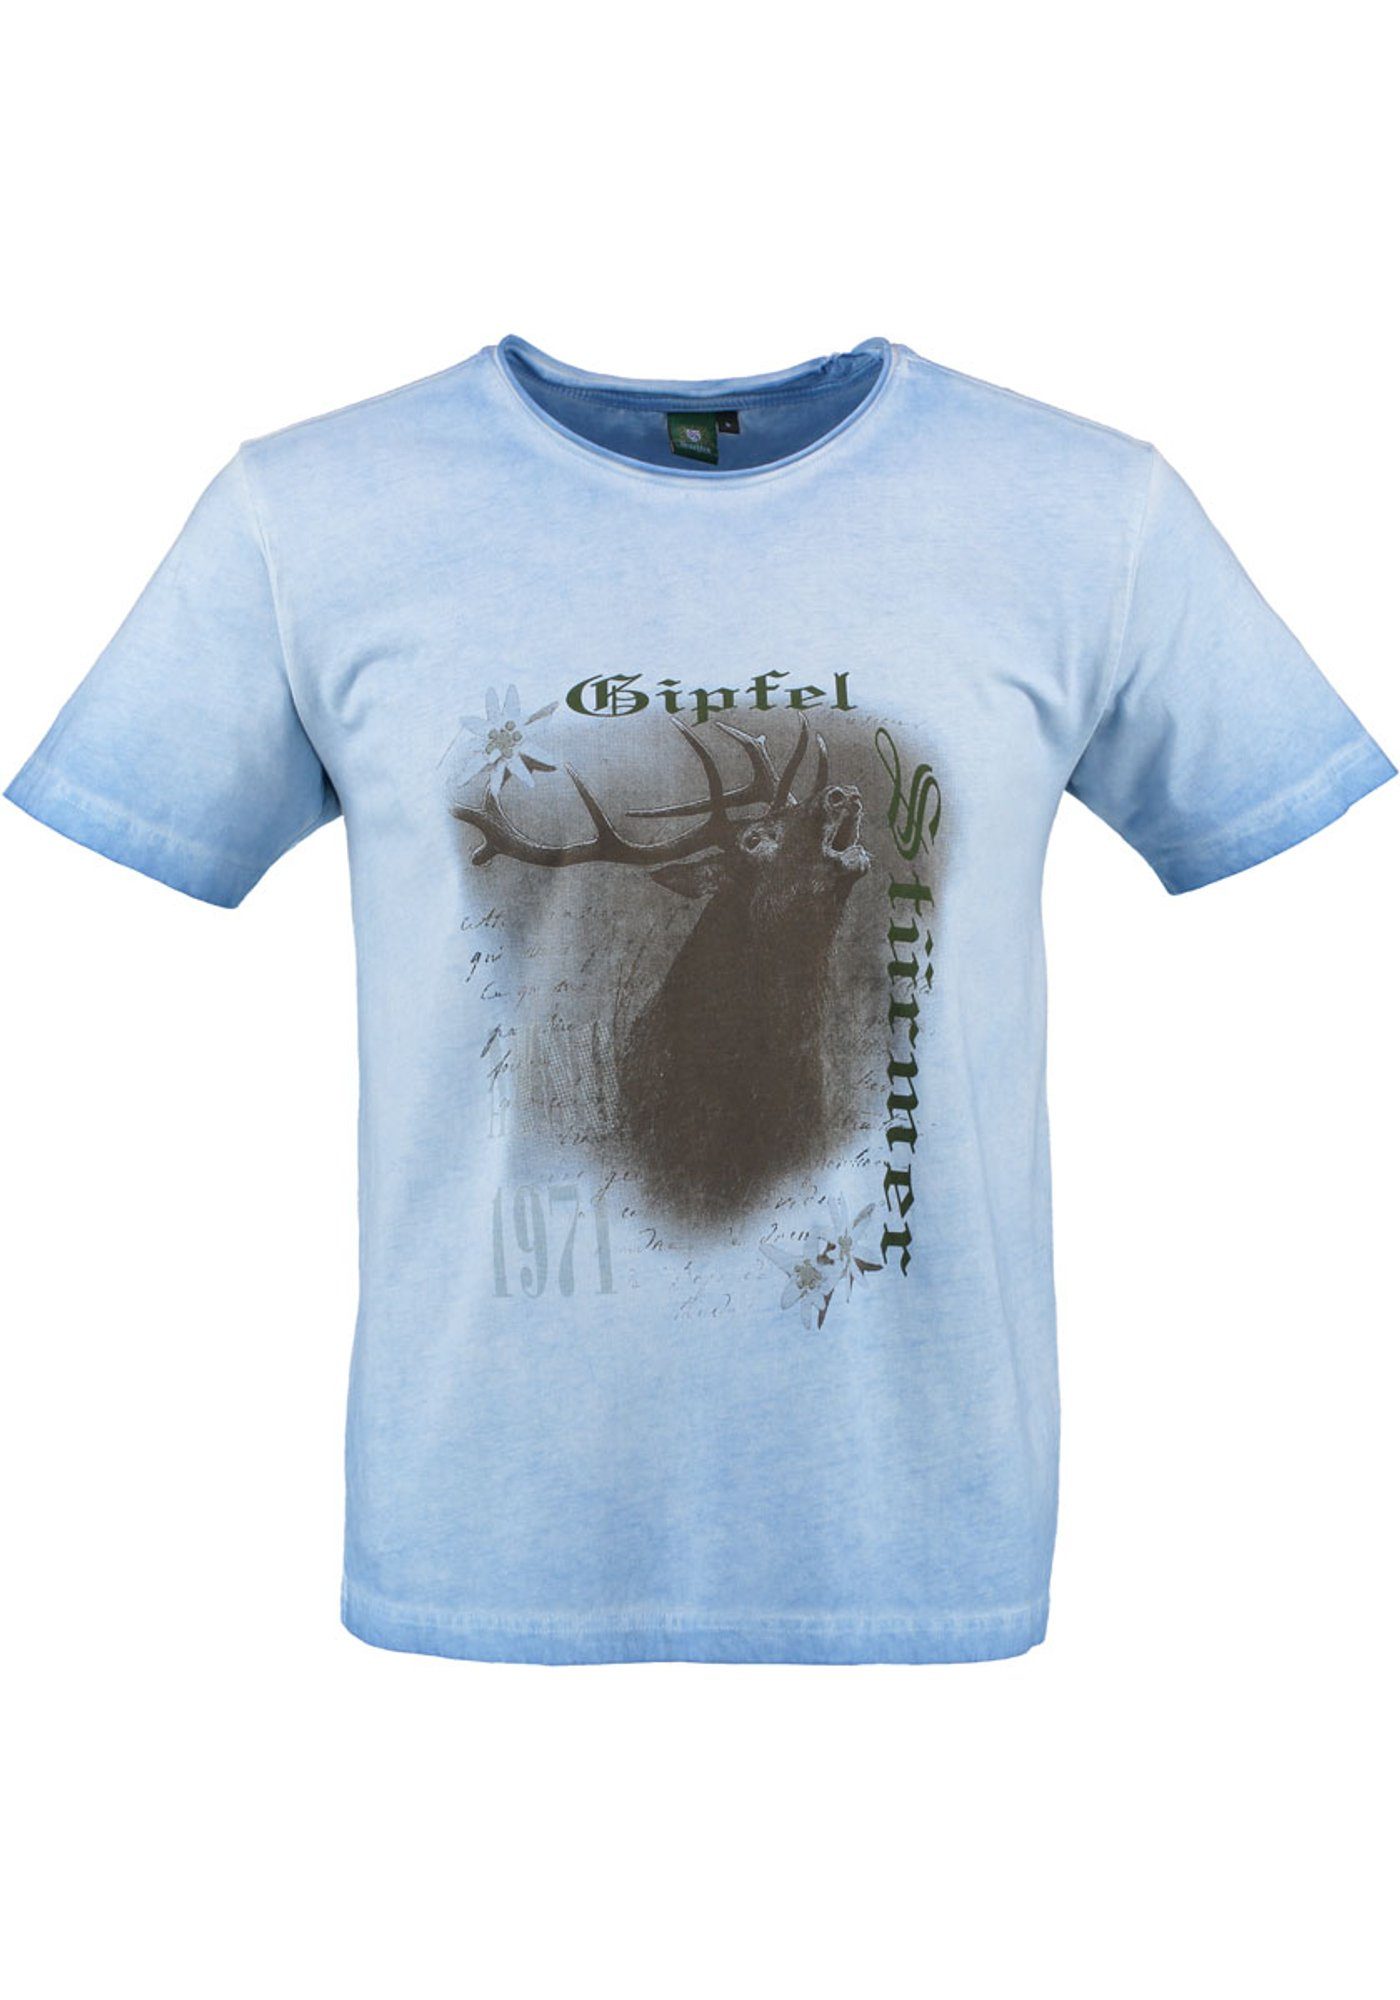 OS-Trachten Trachtenshirt Lyusop Kurzarm T-Shirt mit Motivdruck kornblau